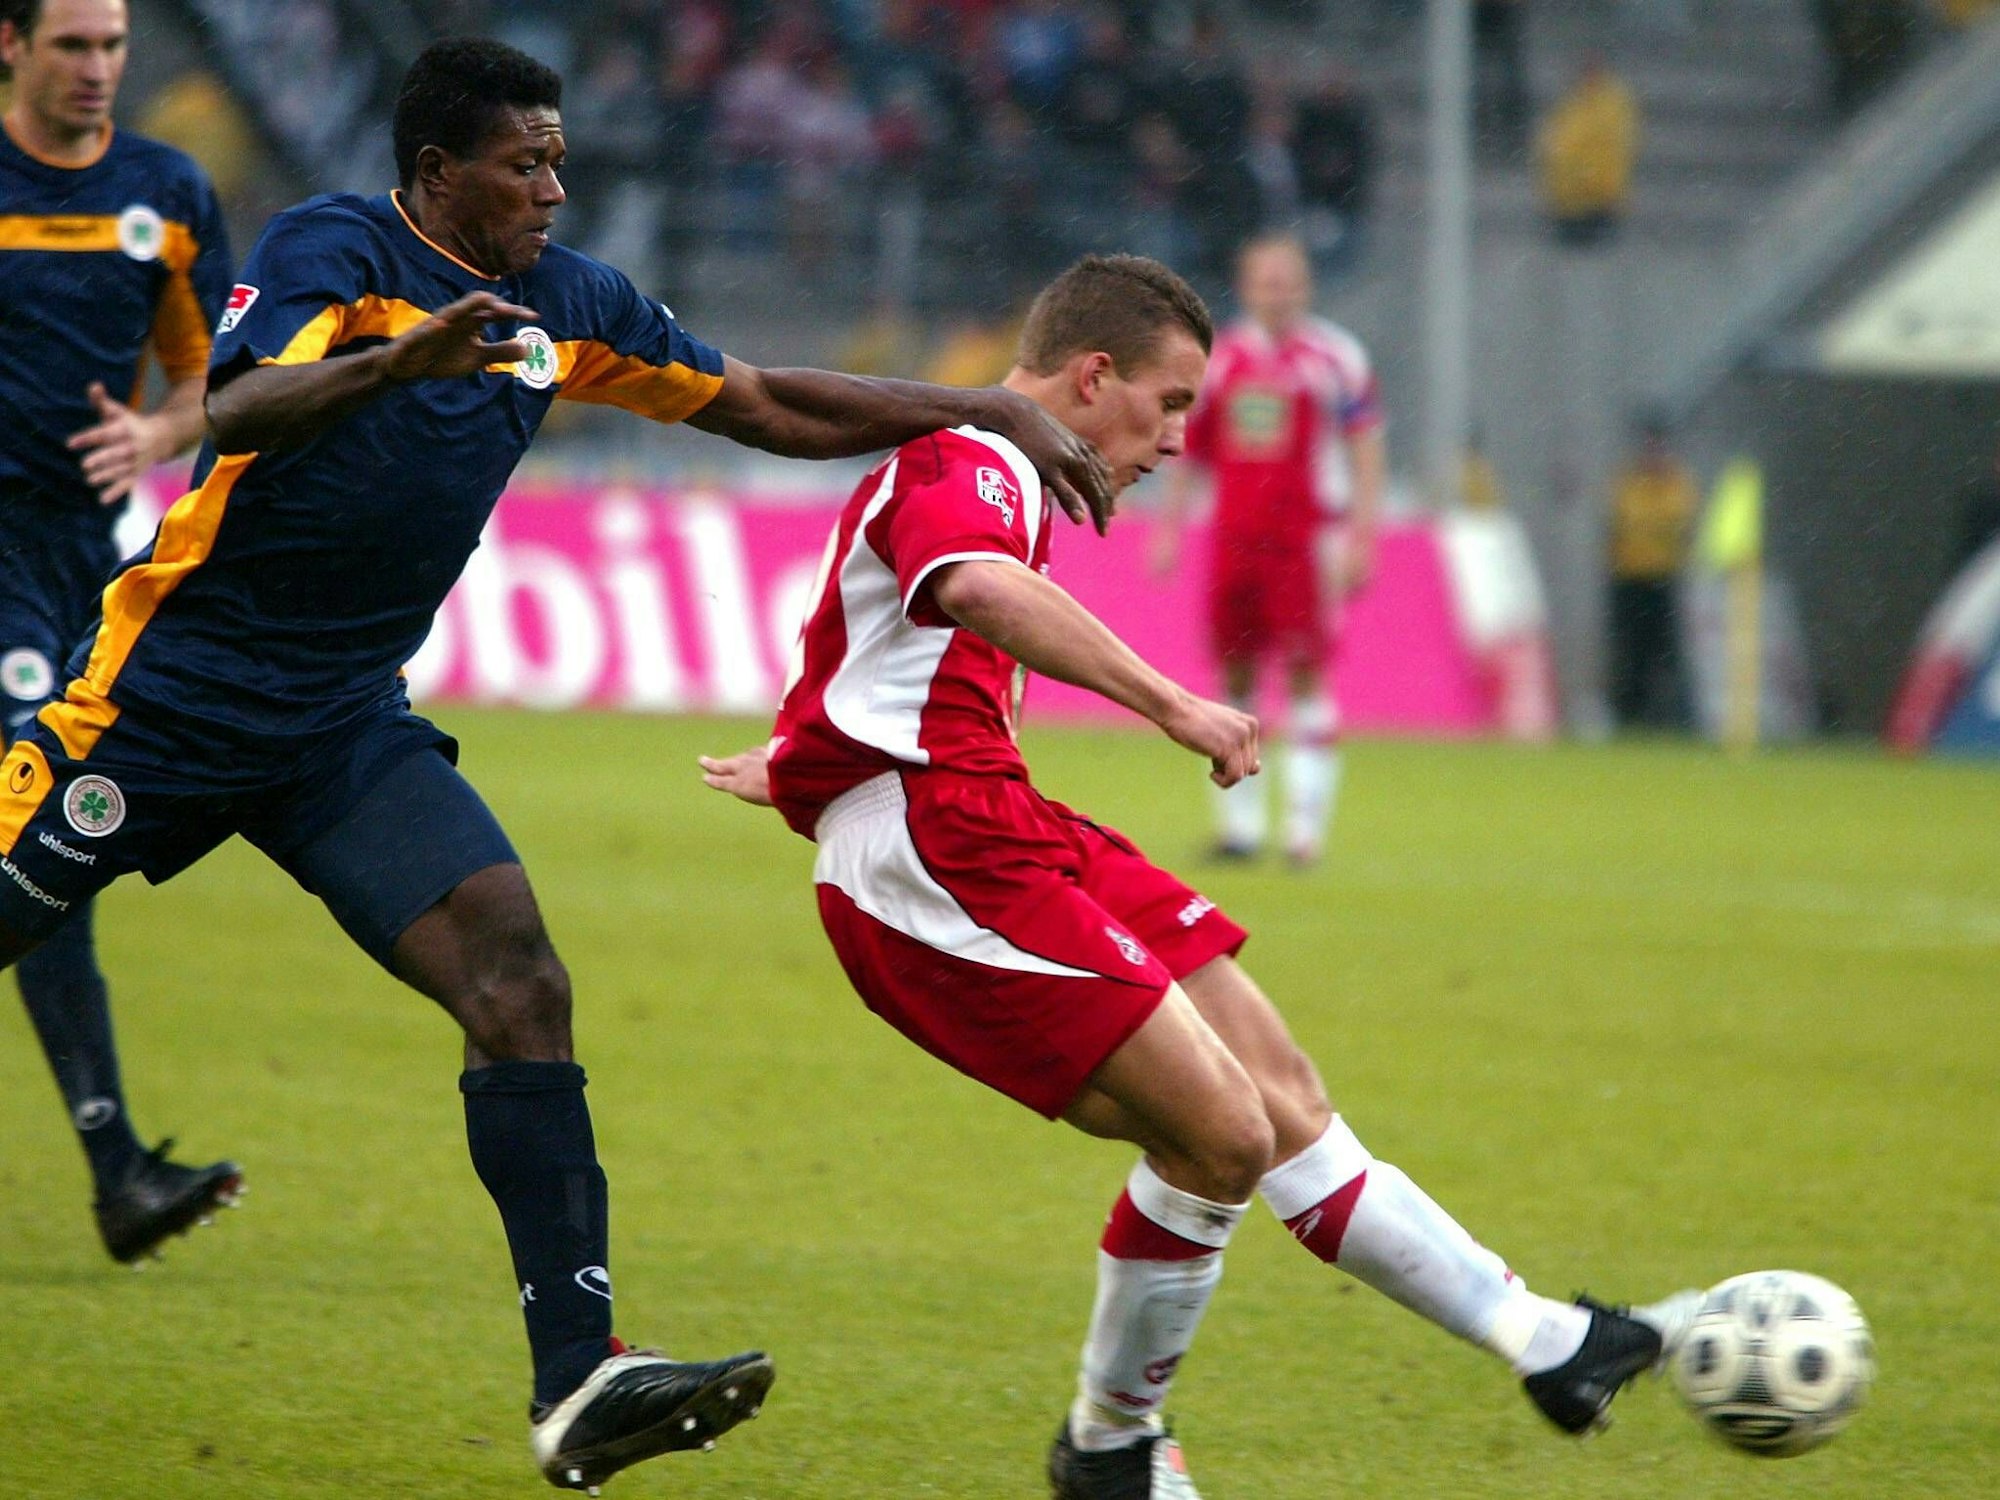 Lukas Podolski (r., 1 FC Köln) gegen Anthony Tieku (RW Oberhausen) beim Bundesliga-Spiel im Oktober 2004.